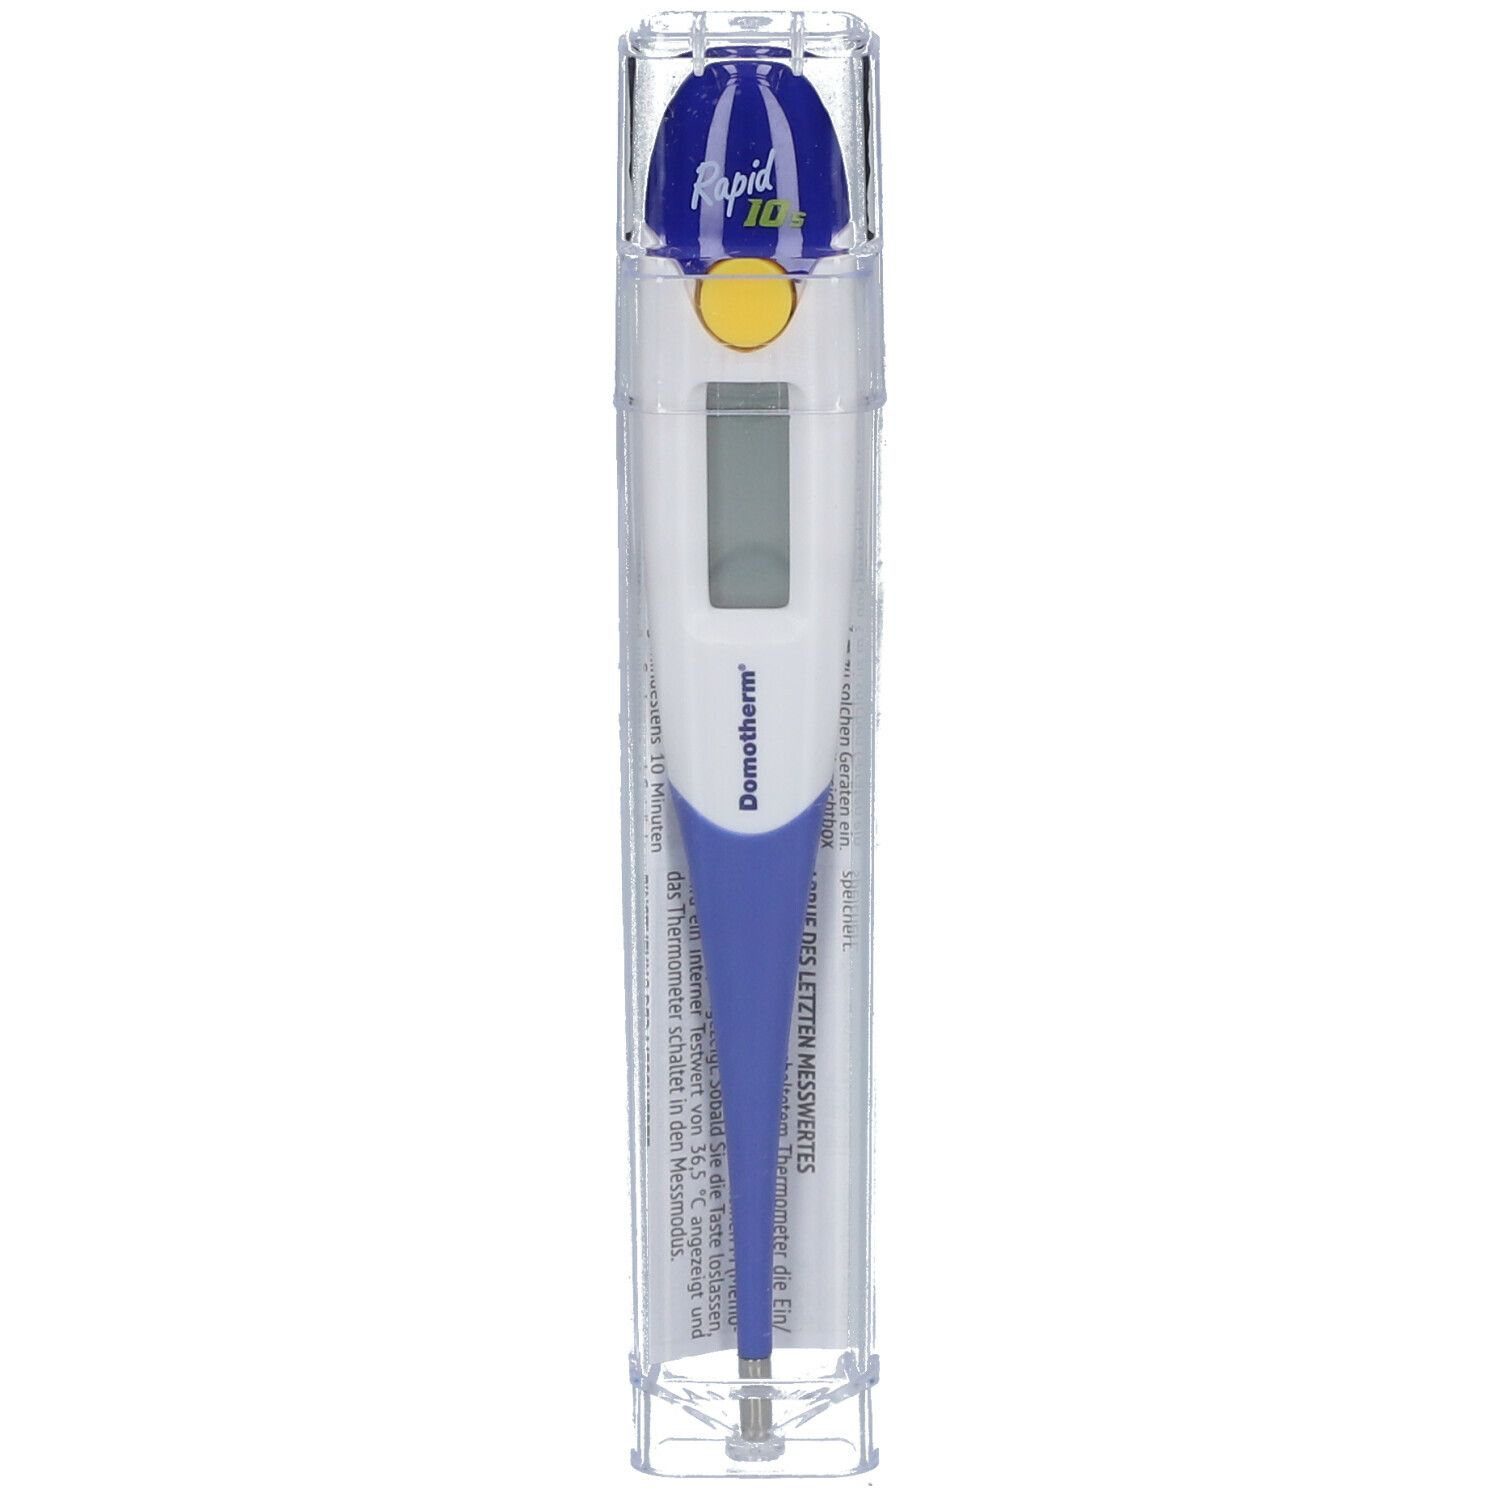 Domotherm® Rapid Fieberthermometer